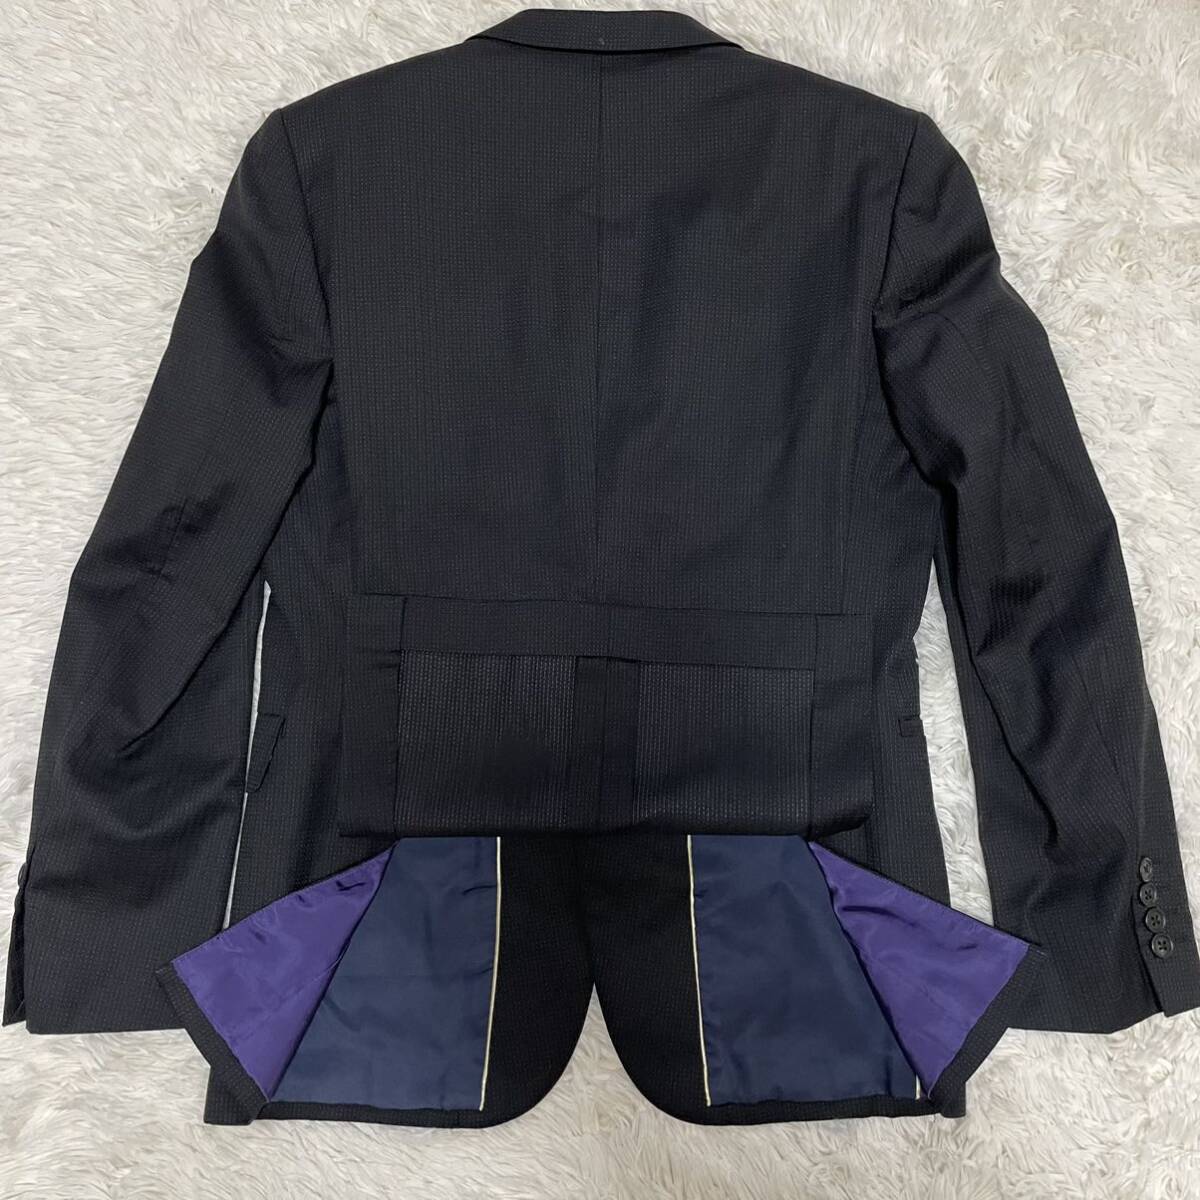  Loro Piana *Paul Smith Paul Smith Super130\'s suit setup dot Loro Piana lining purple black black wool jacket 